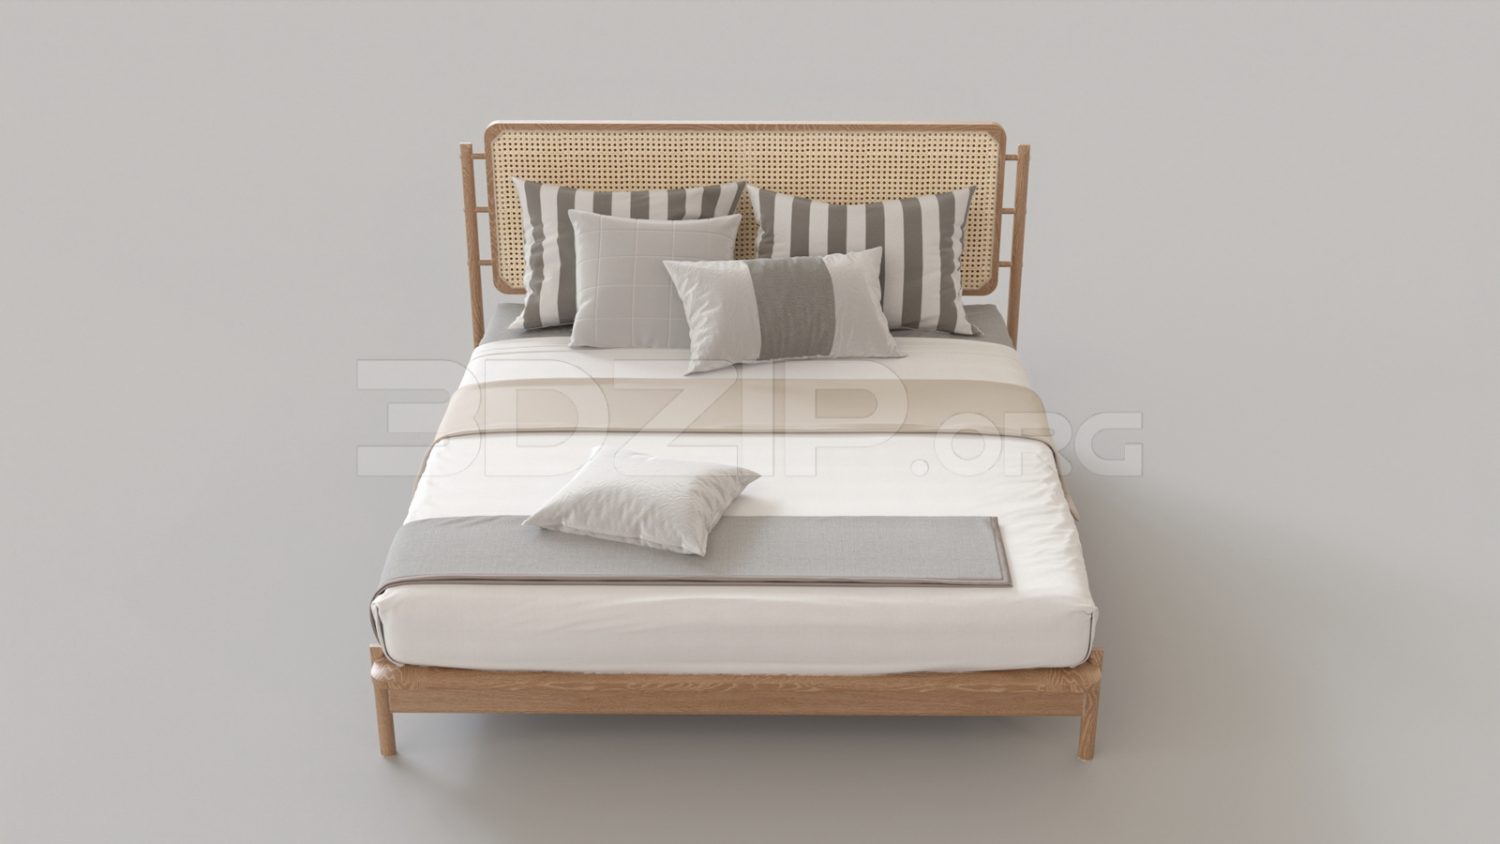 5082. Free 3D Bed Model Download